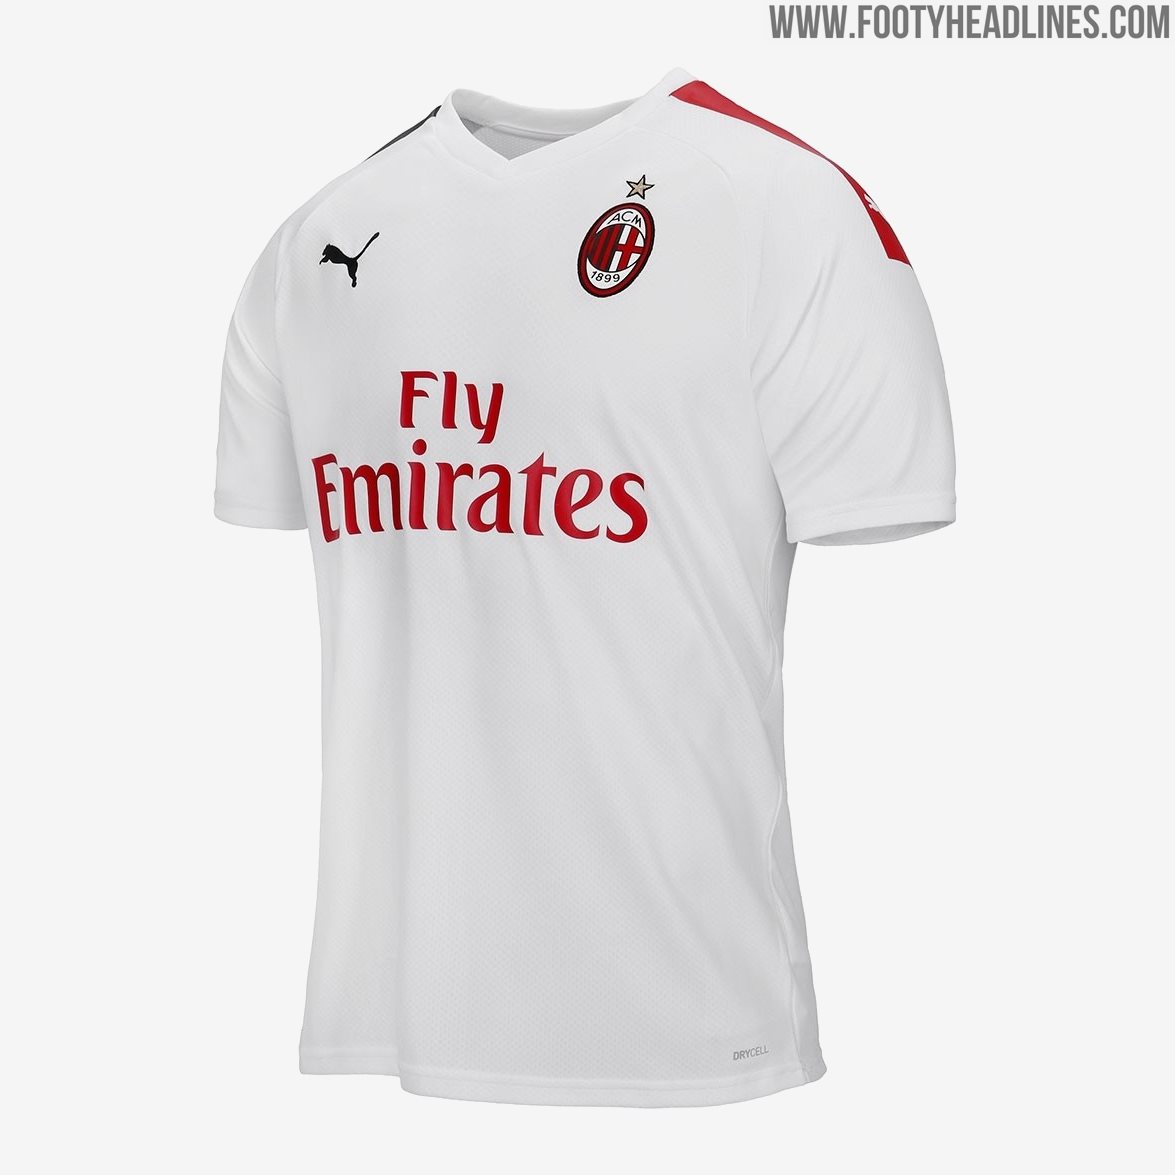 tilbage etc Sindssyge AC Milan 19-20 Home, Away & Third Kits Released - Footy Headlines